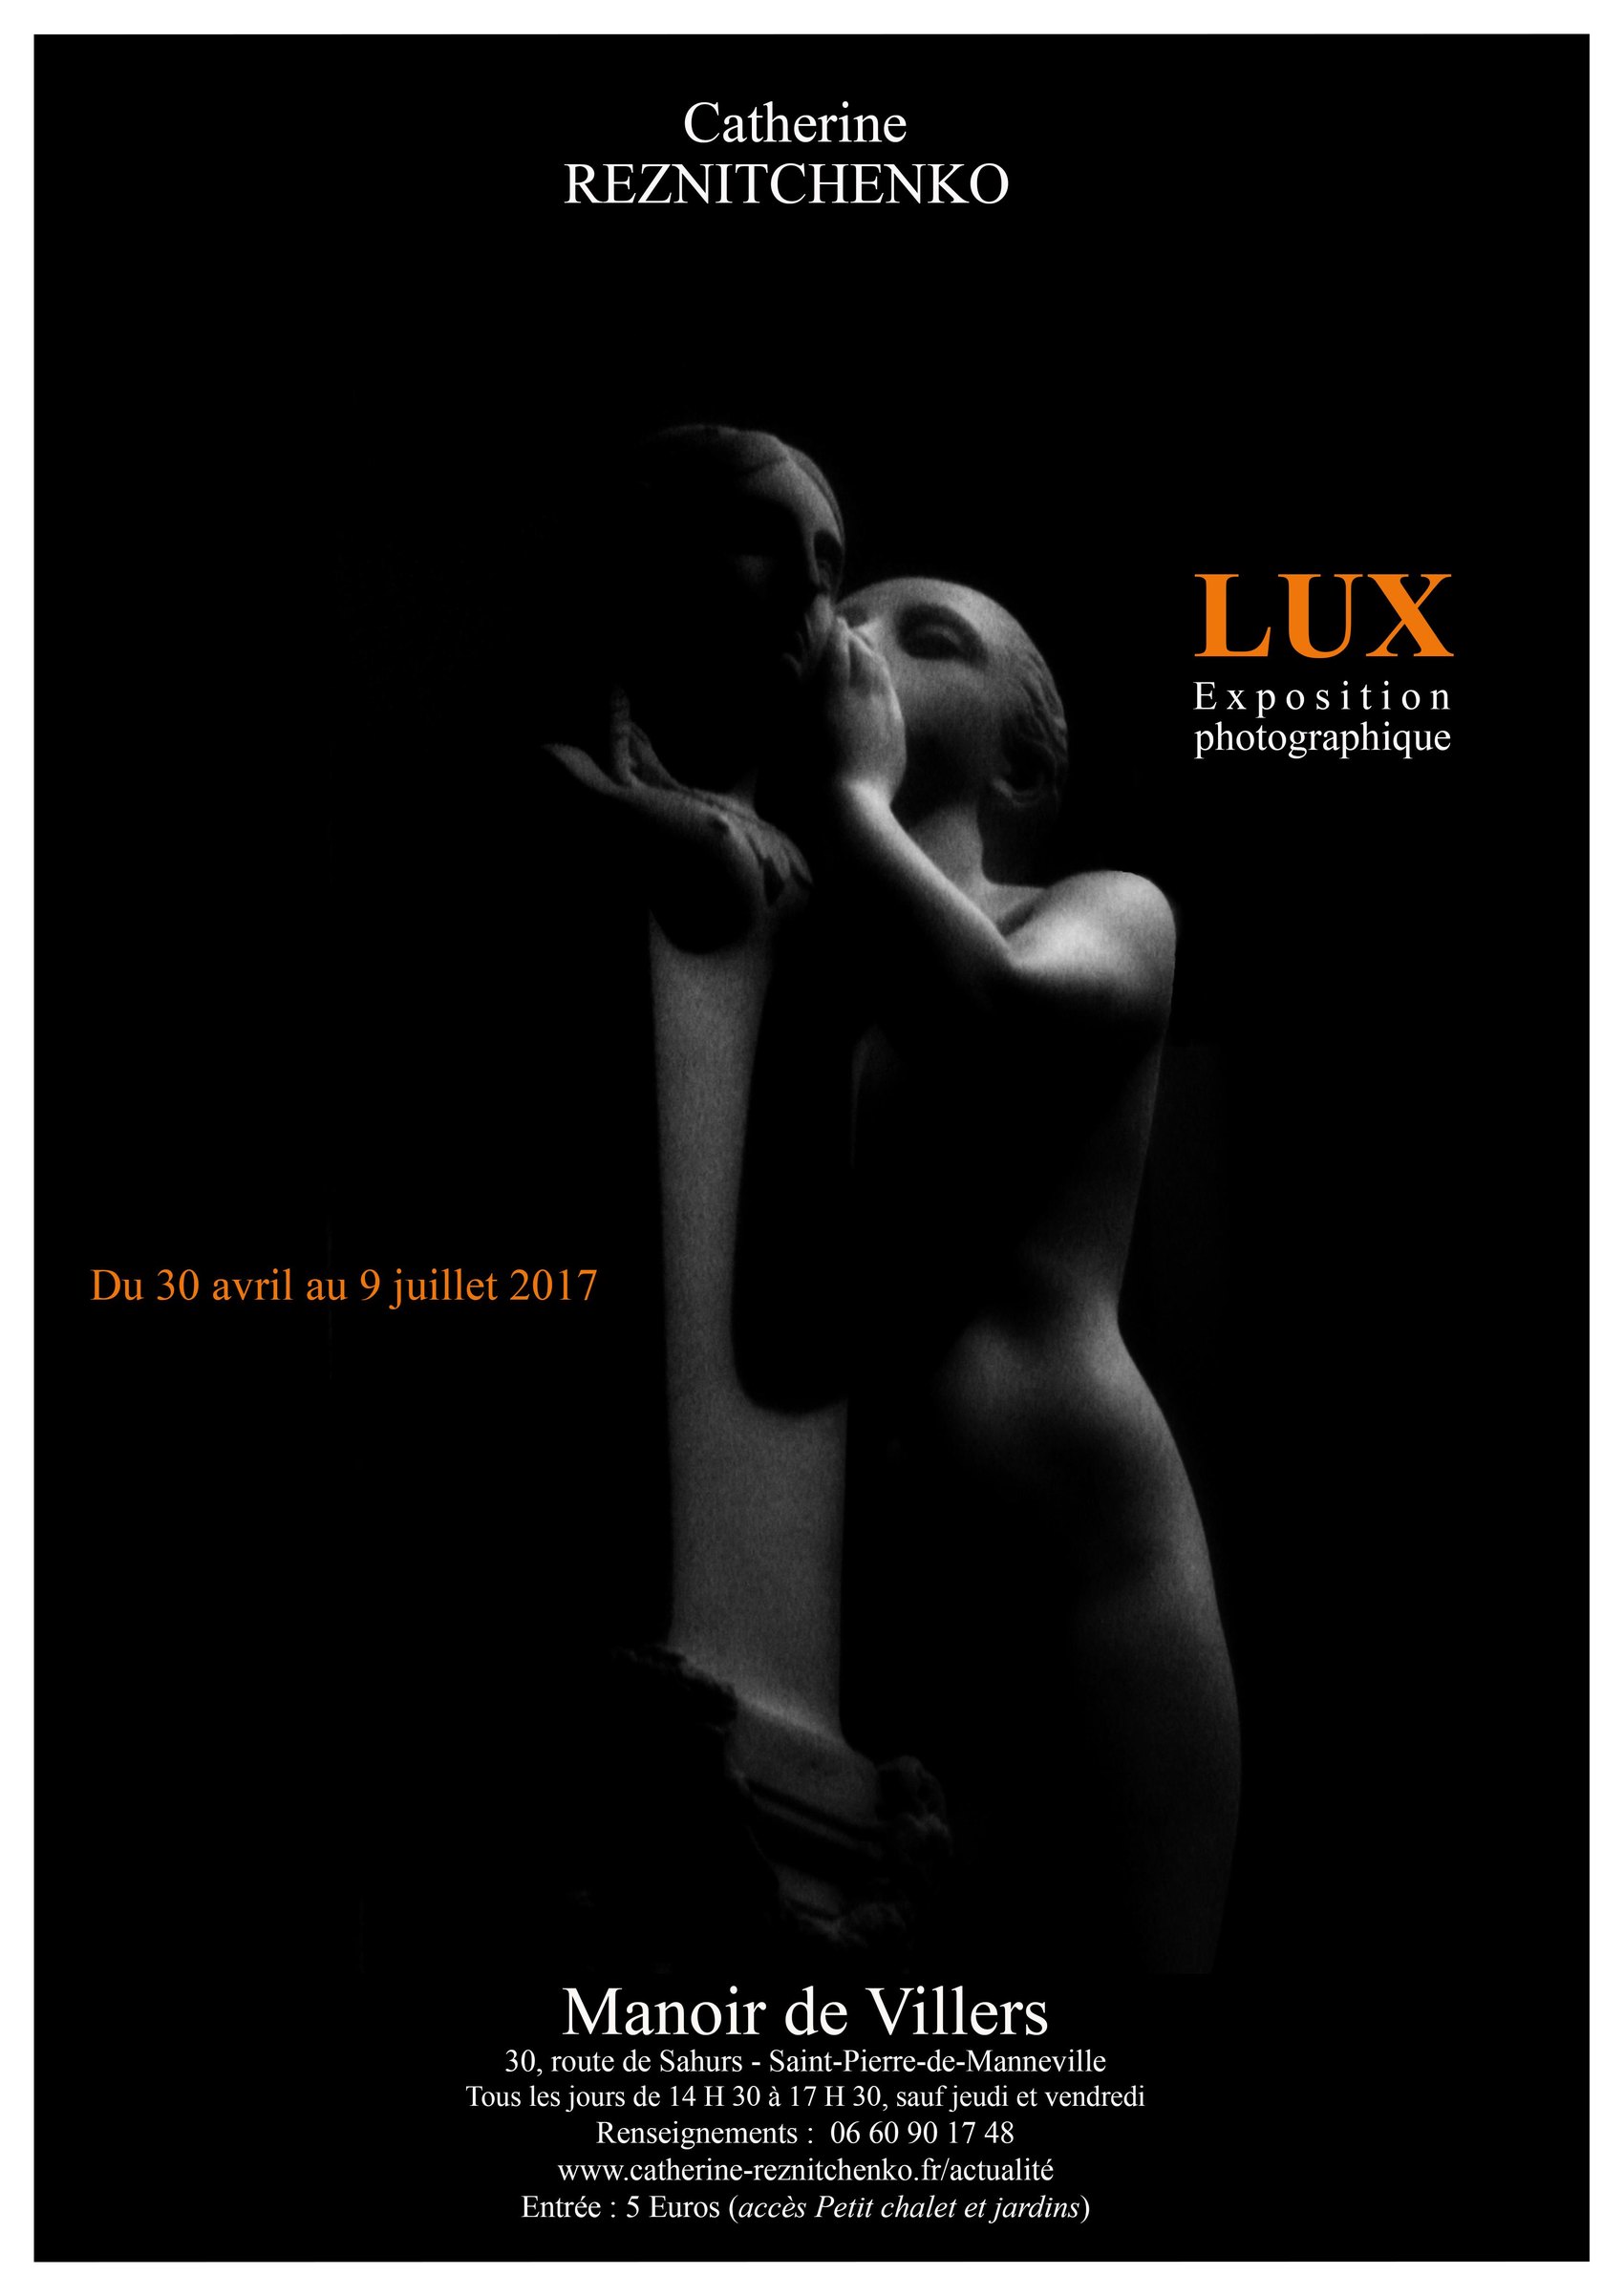 LUX, exposition photographique de Catherine Reznitchenko